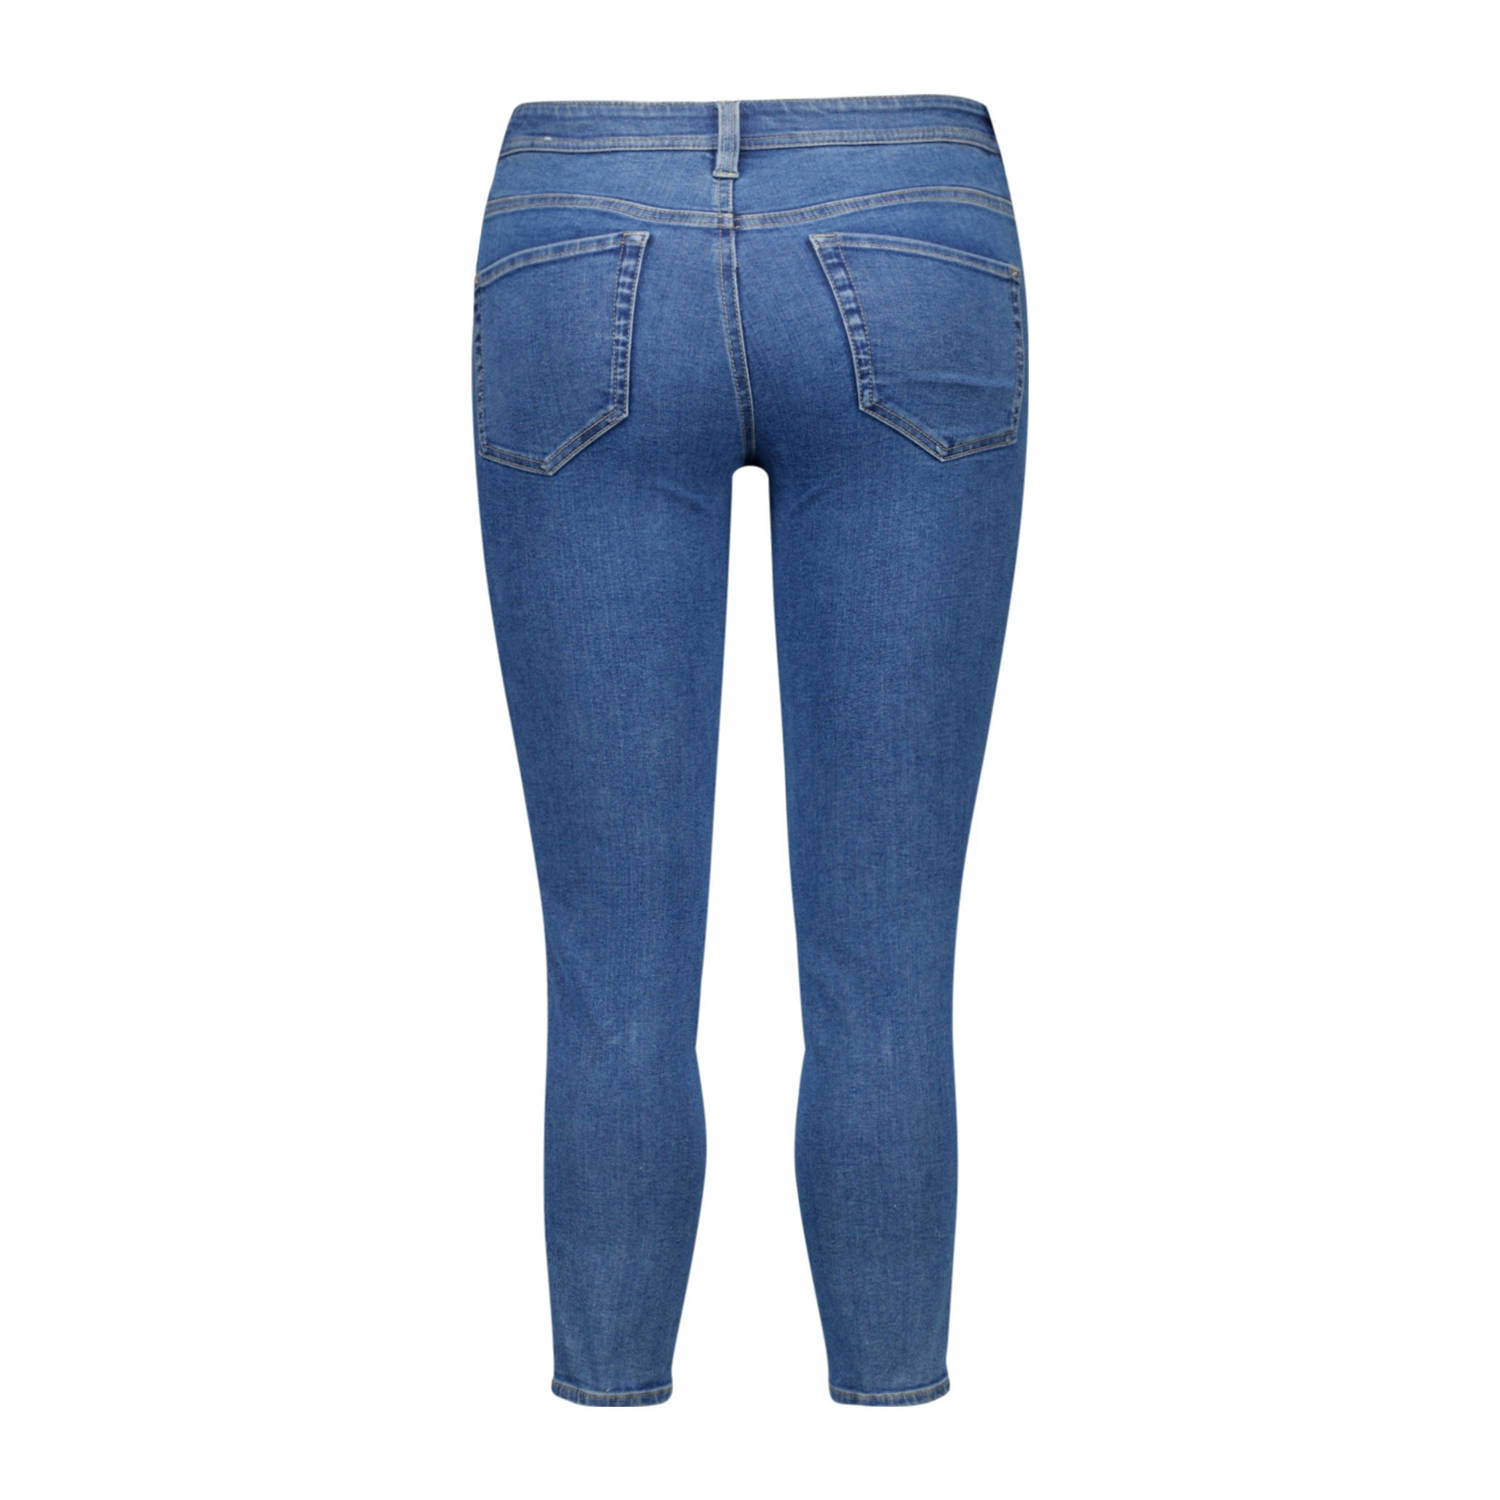 MS Mode cropped jeans blue denim